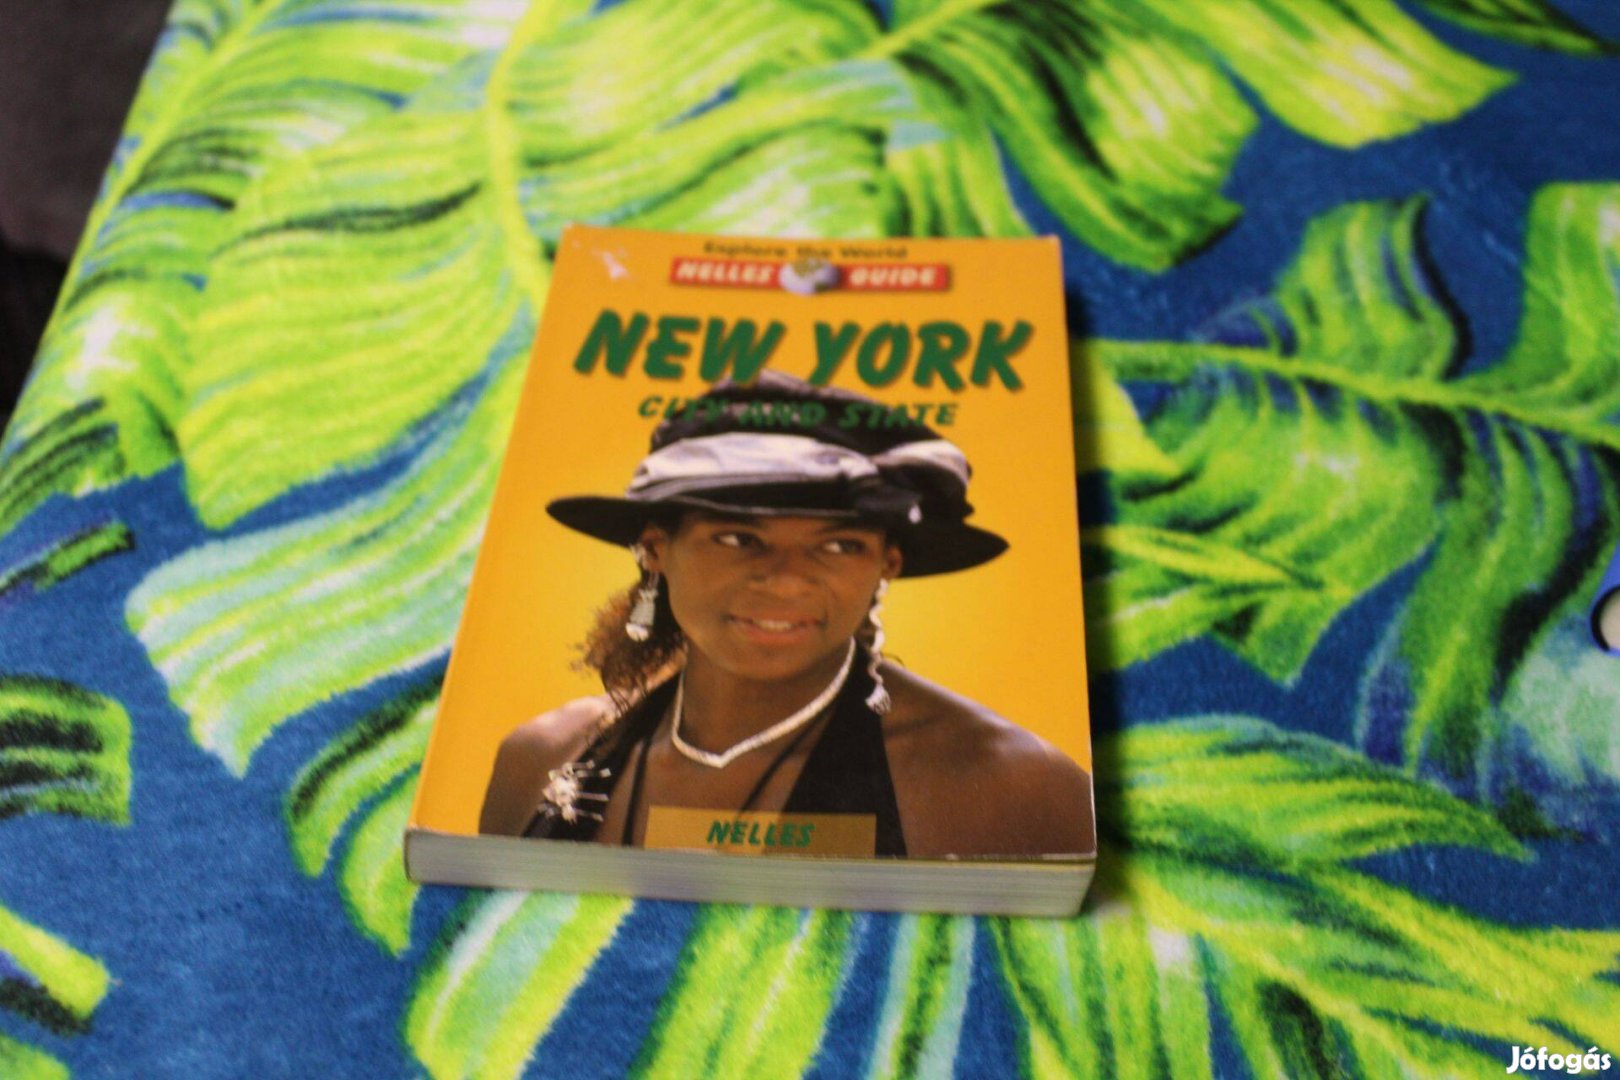 New York guide (varos es allam) utikonyv angolul